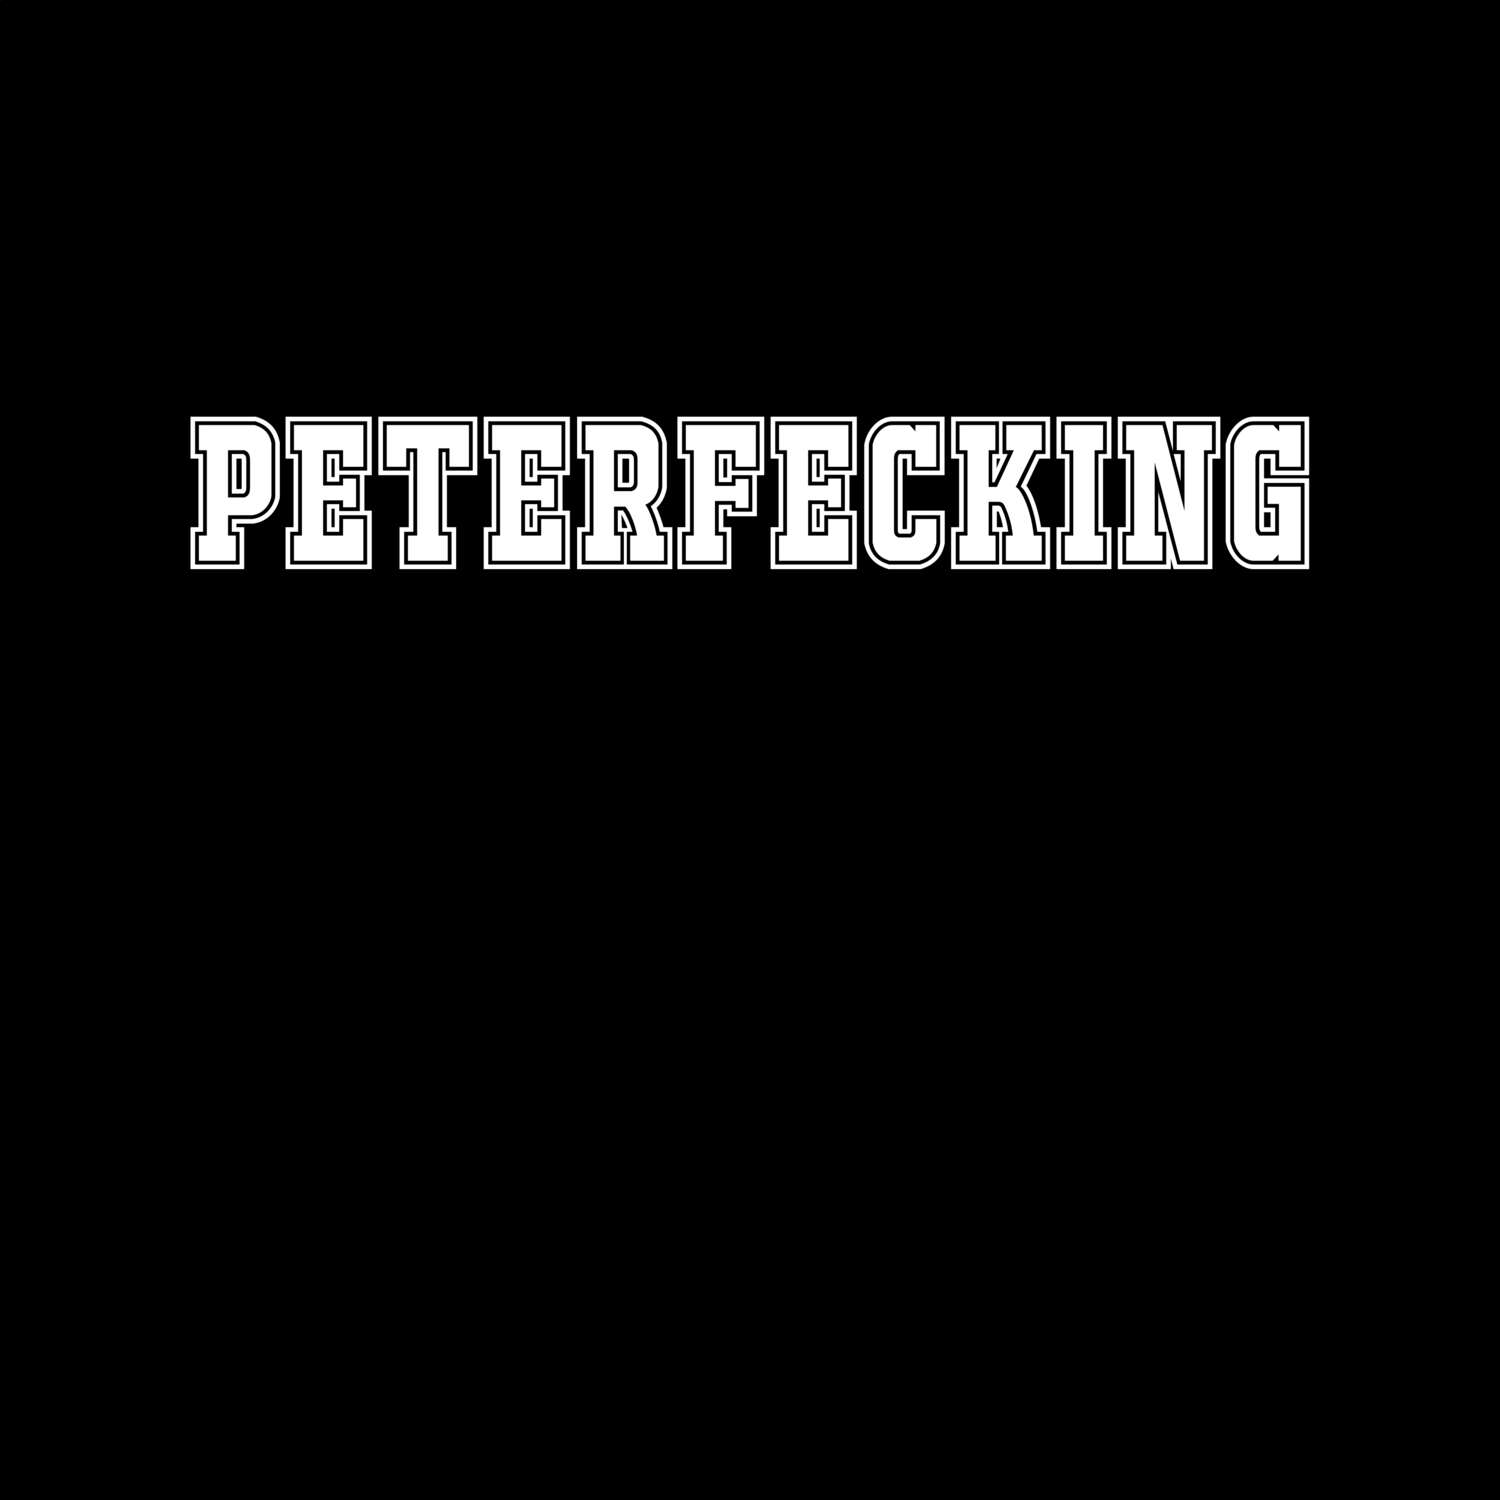 Peterfecking T-Shirt »Classic«